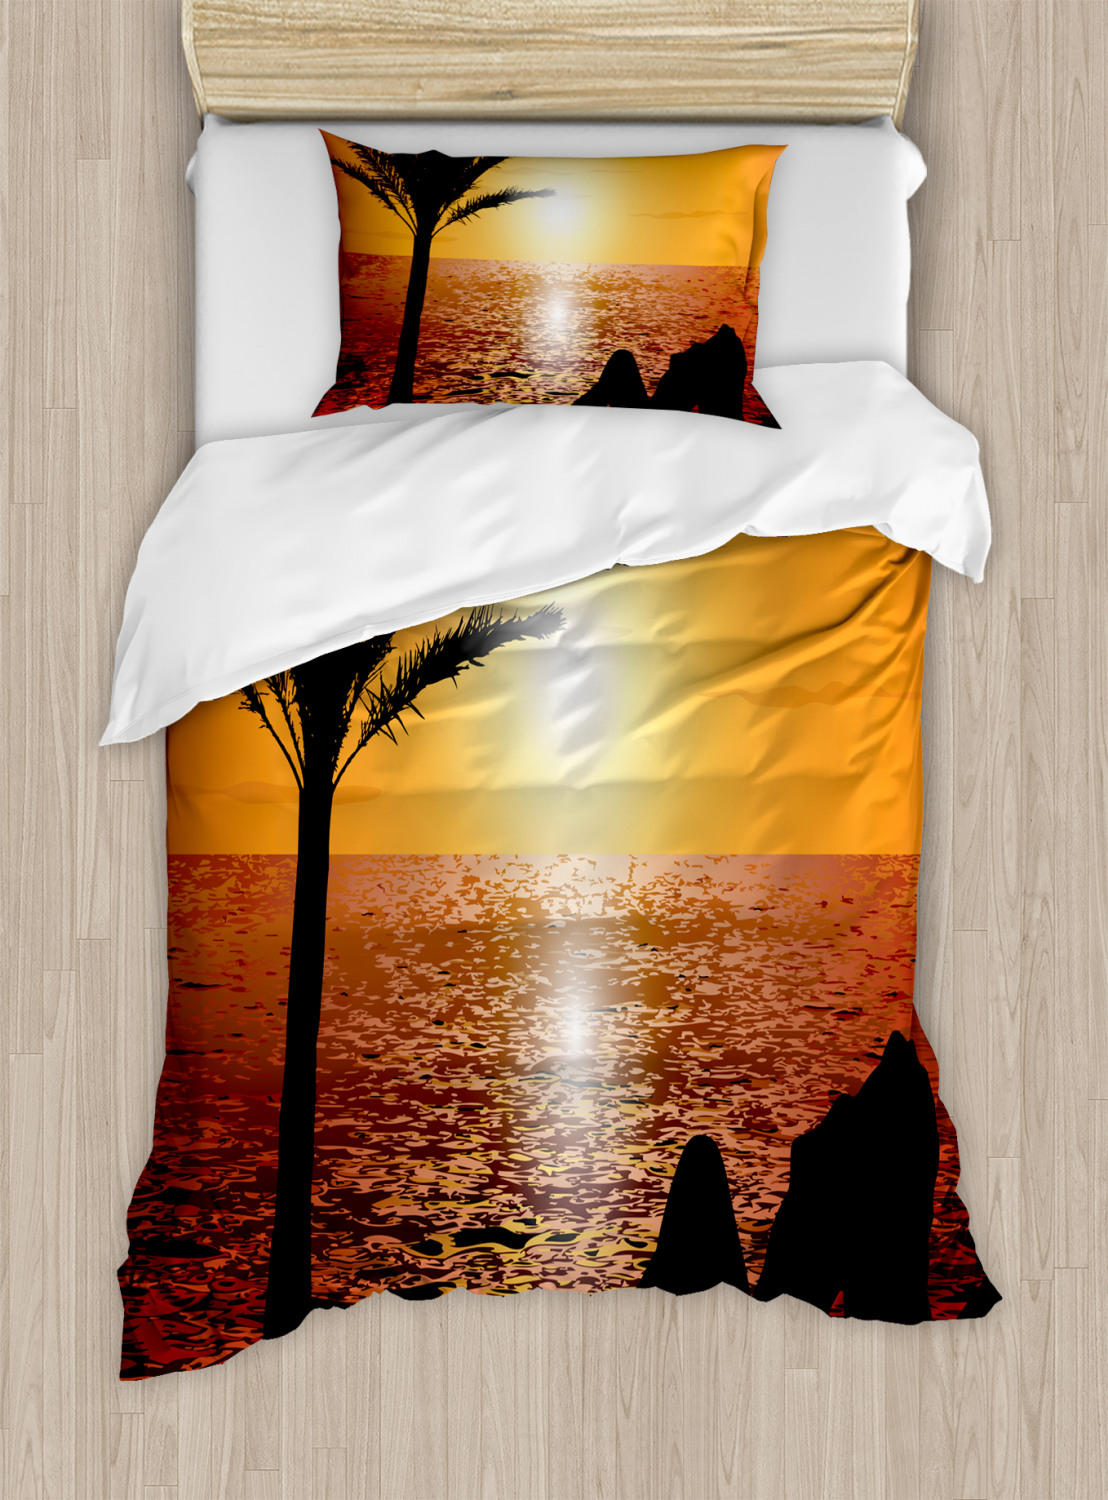 Romantic Duvet Cover Set with Pillow Shams Colorful Beach Sunset Print